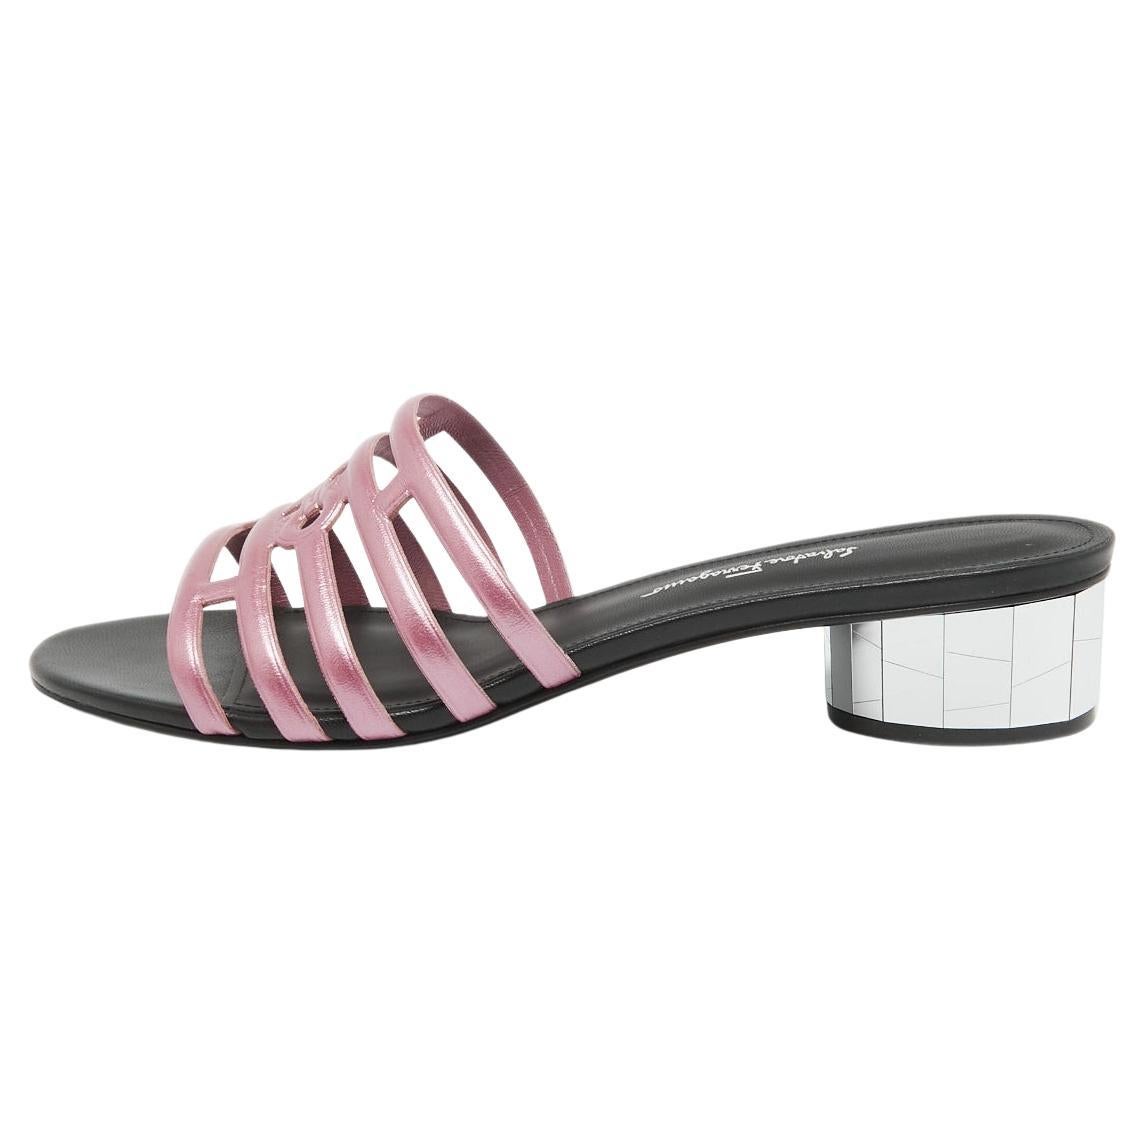 Salvatore Ferragamo Pink/Black Leather Finn Slide Sandals Size 39.5